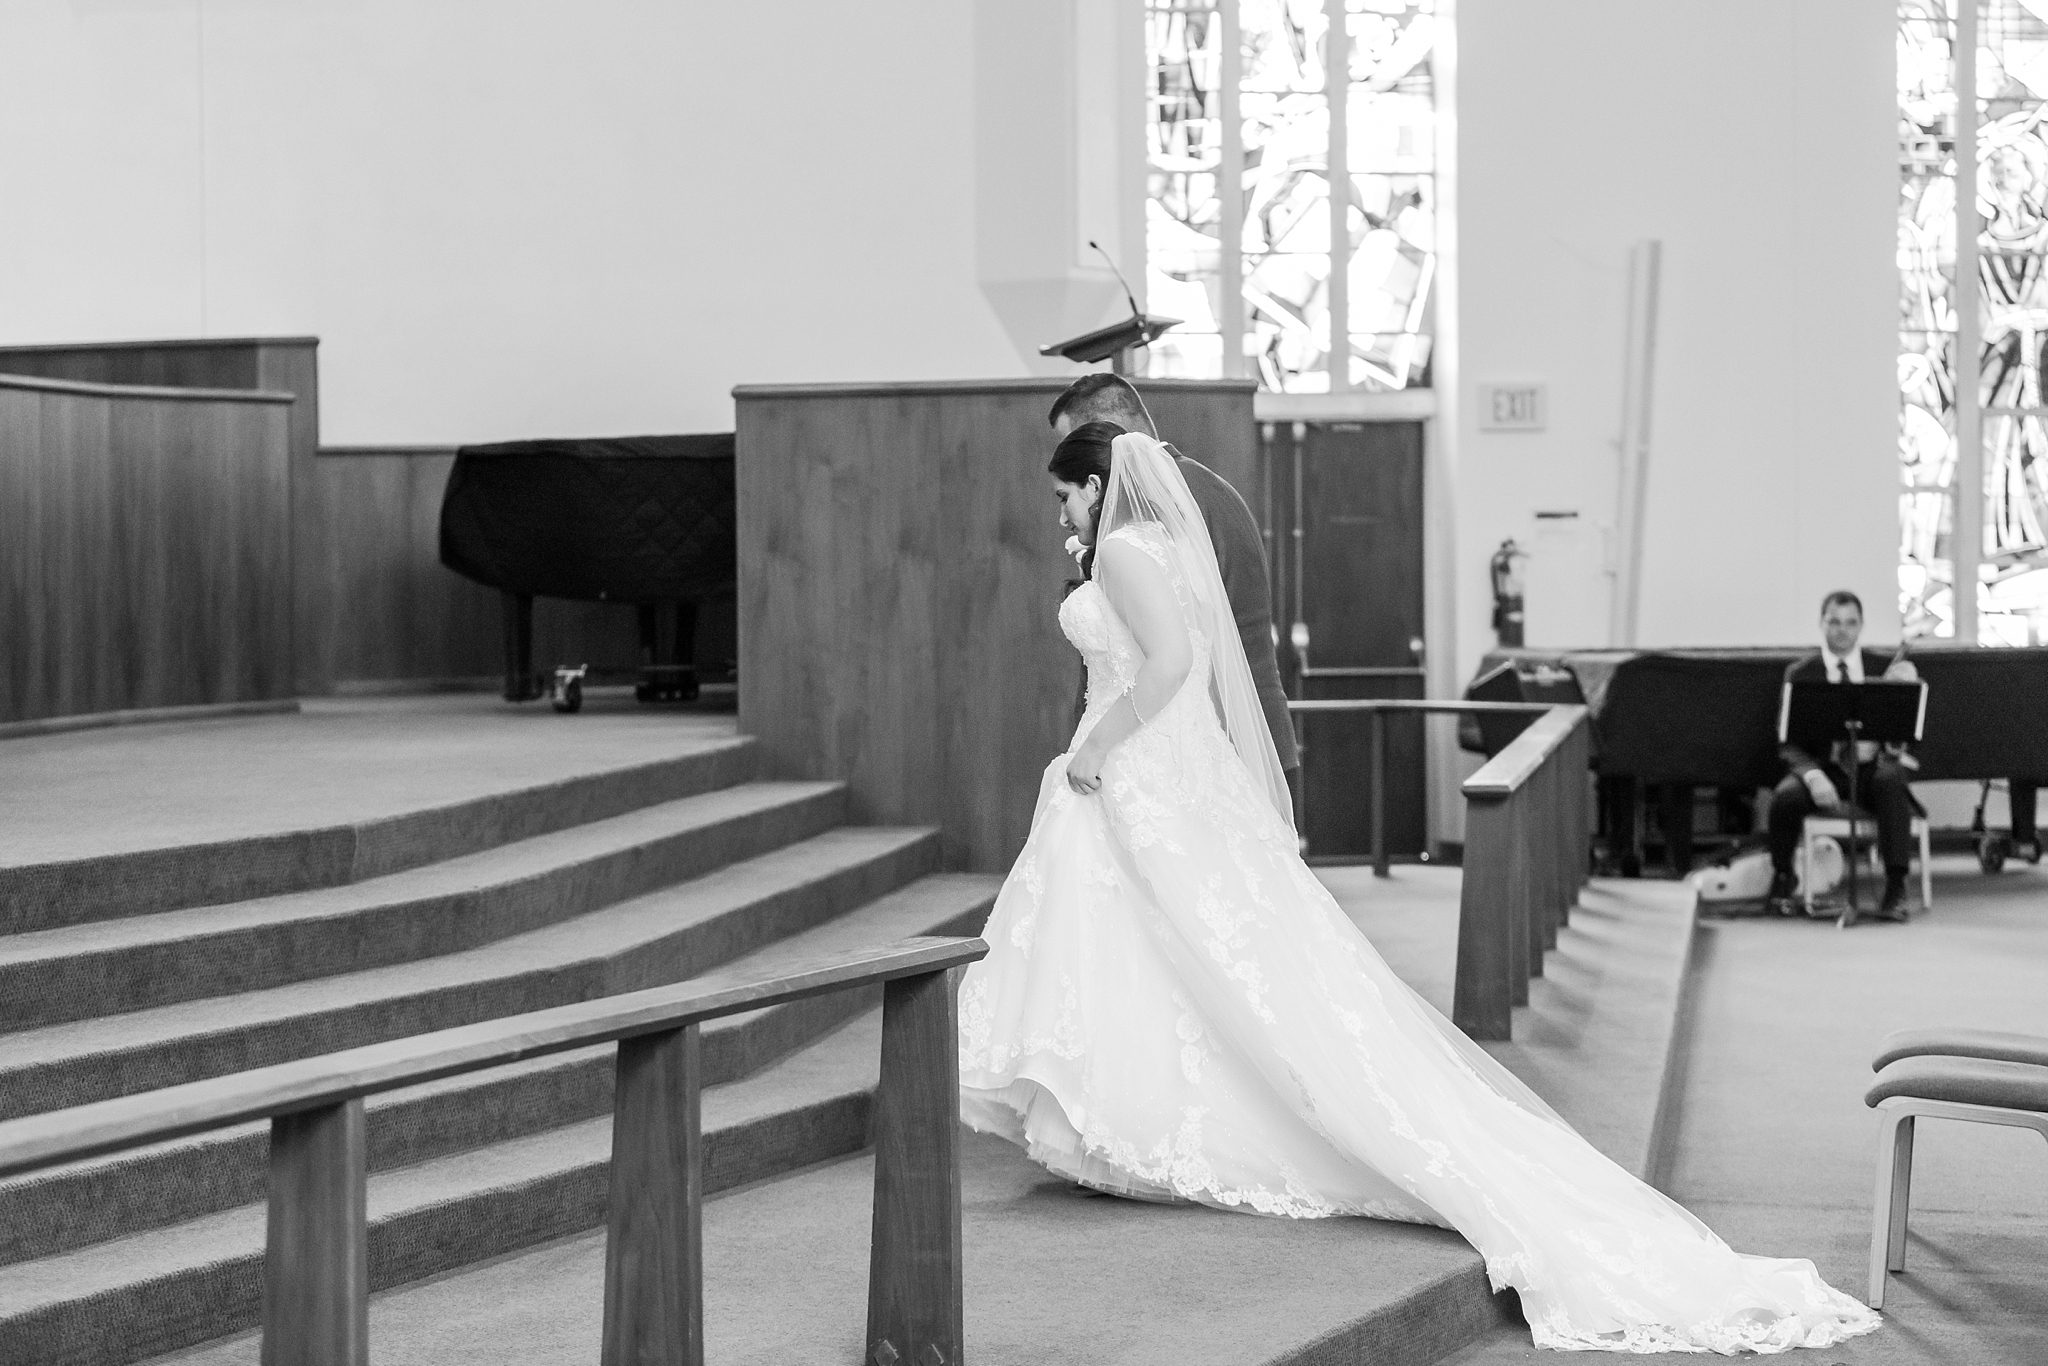 emotional-laid-back-romantic-wedding-photos-at-adrian-college-herrick-chapel-in-adrian-michigan-by-courtney-carolyn-photography_0024.jpg